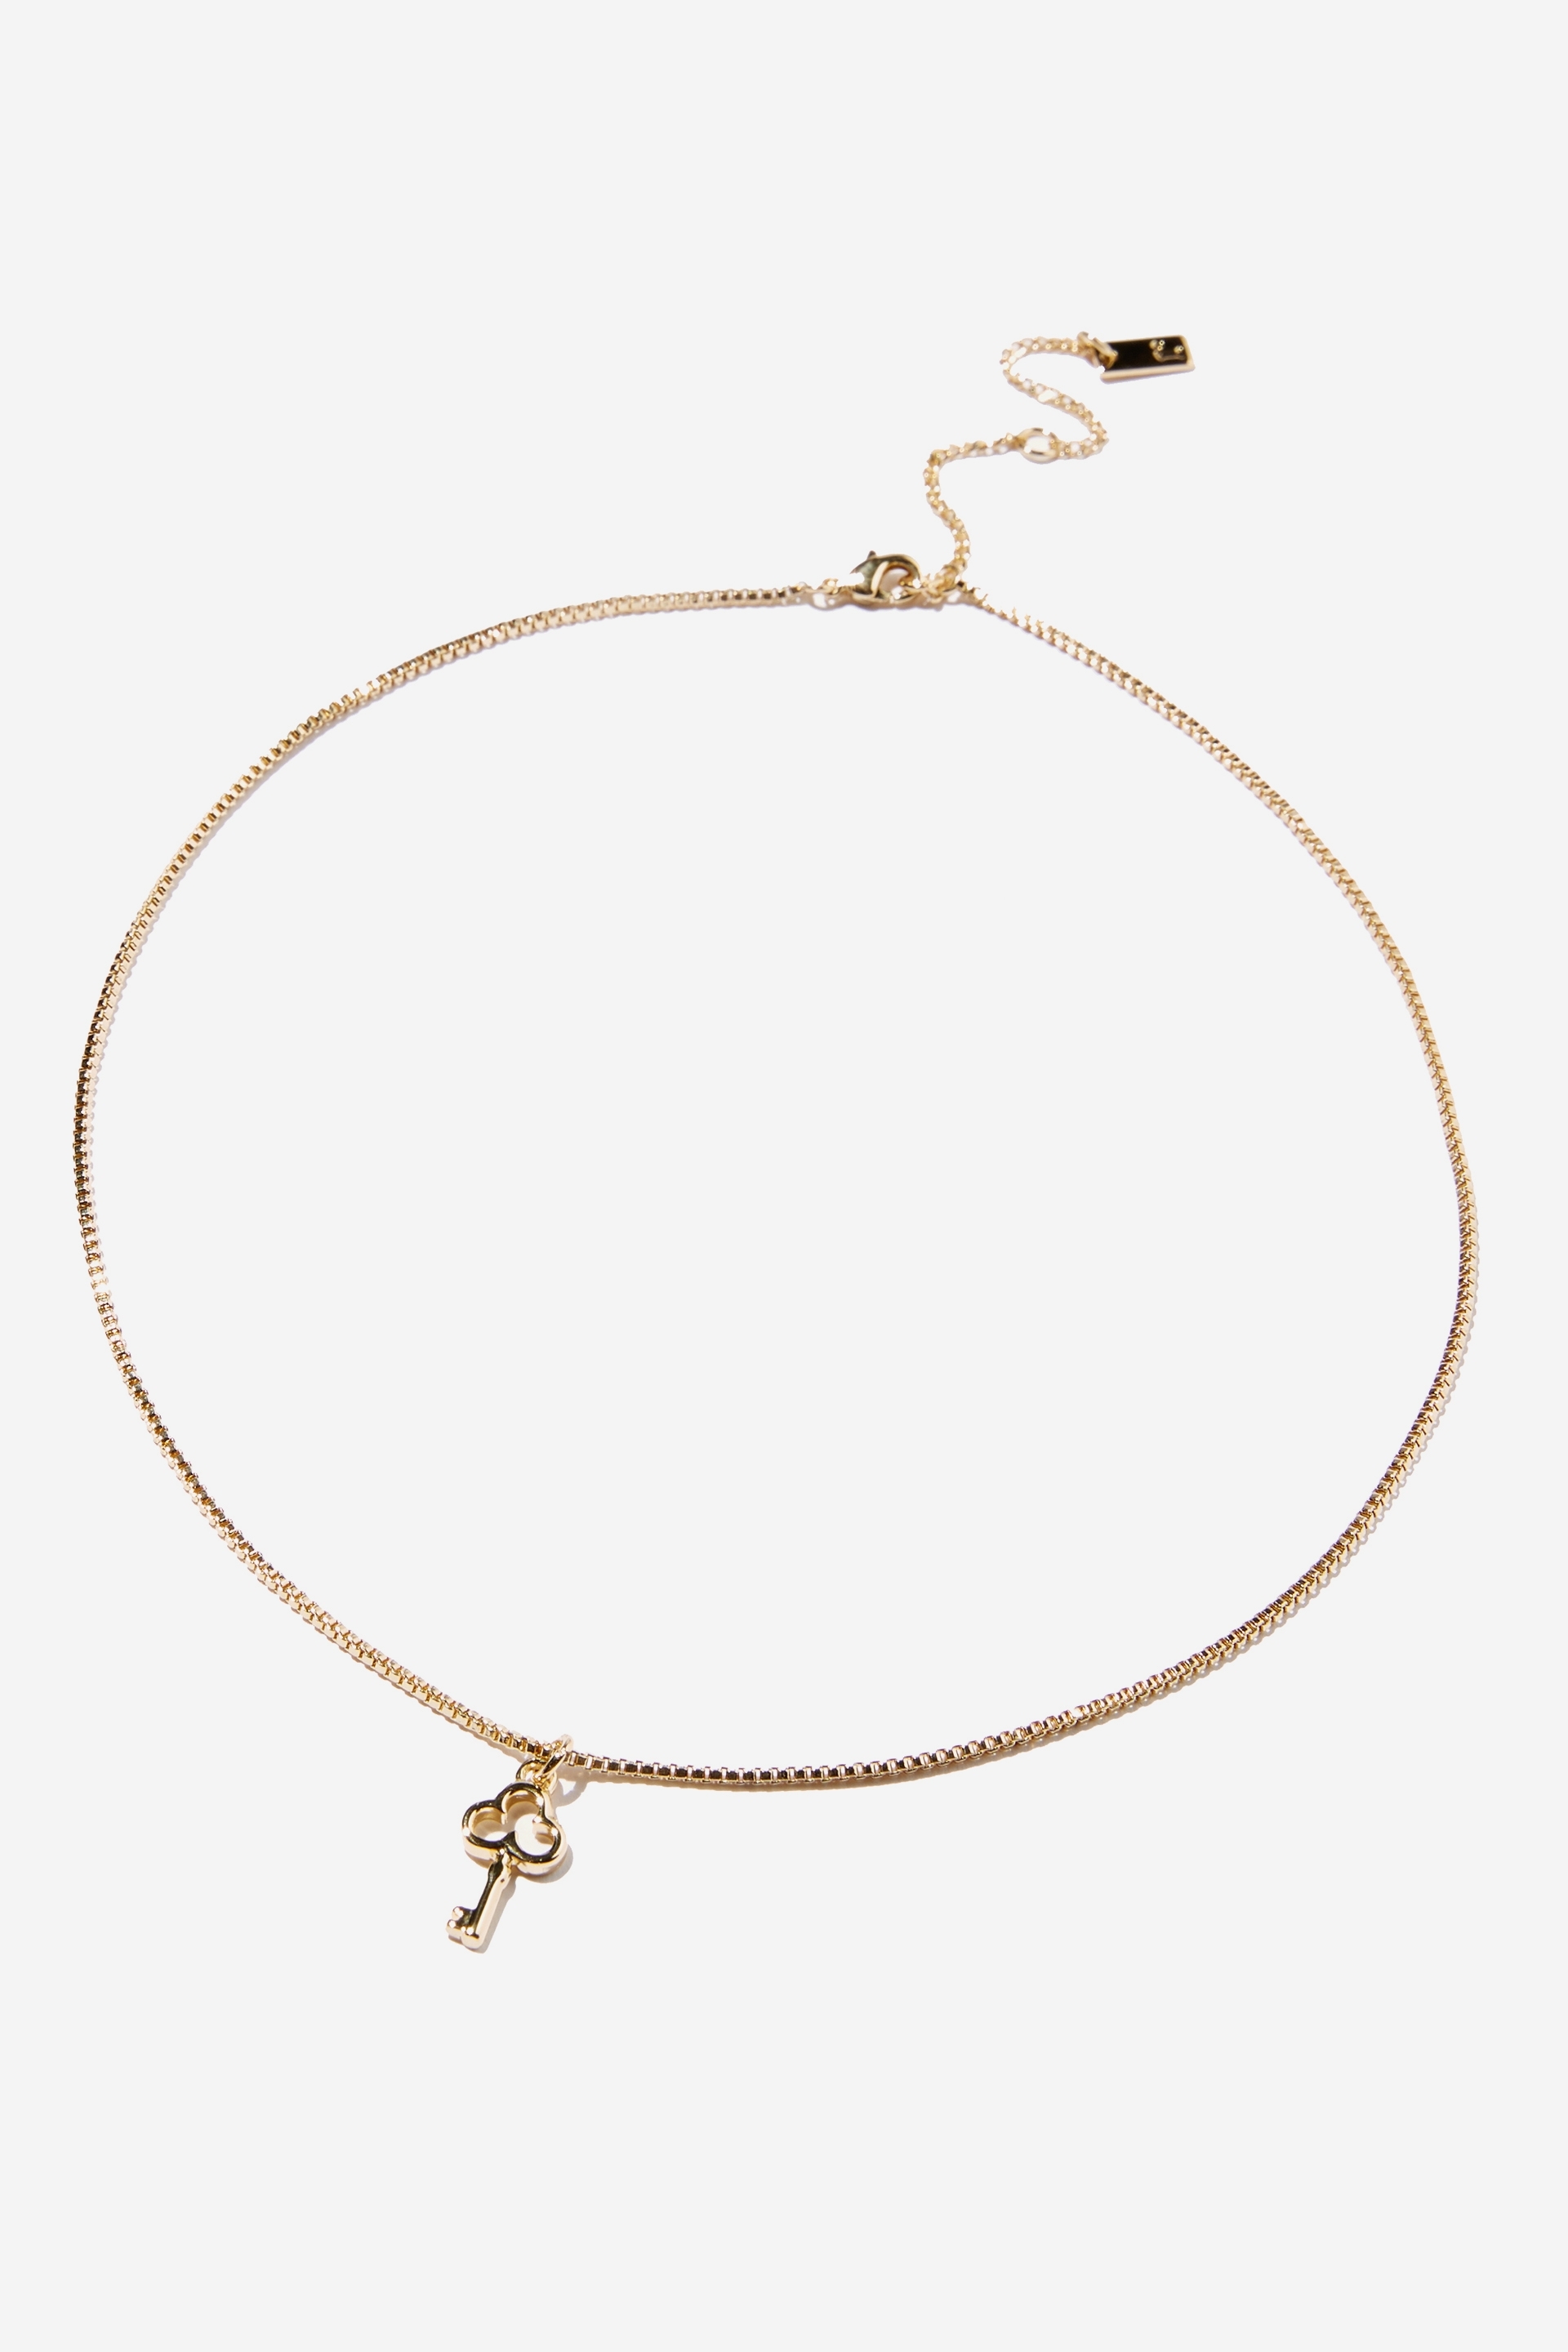 Rubi - Premium Pendant Necklace - Gold plated key